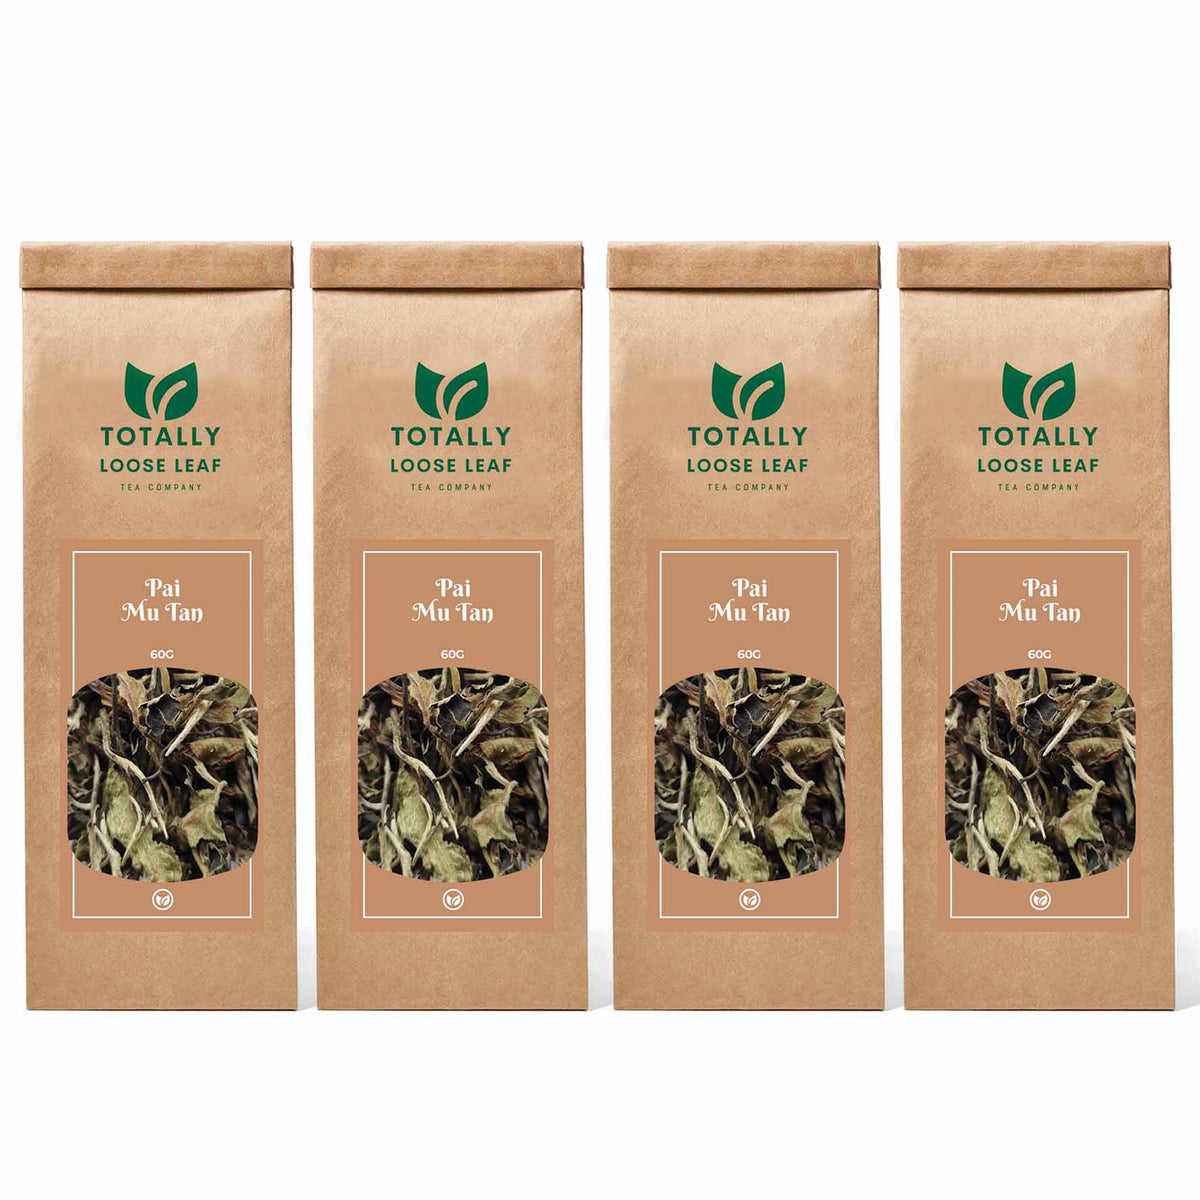 Pai Mu Tan White Loose Leaf Tea - four pouches